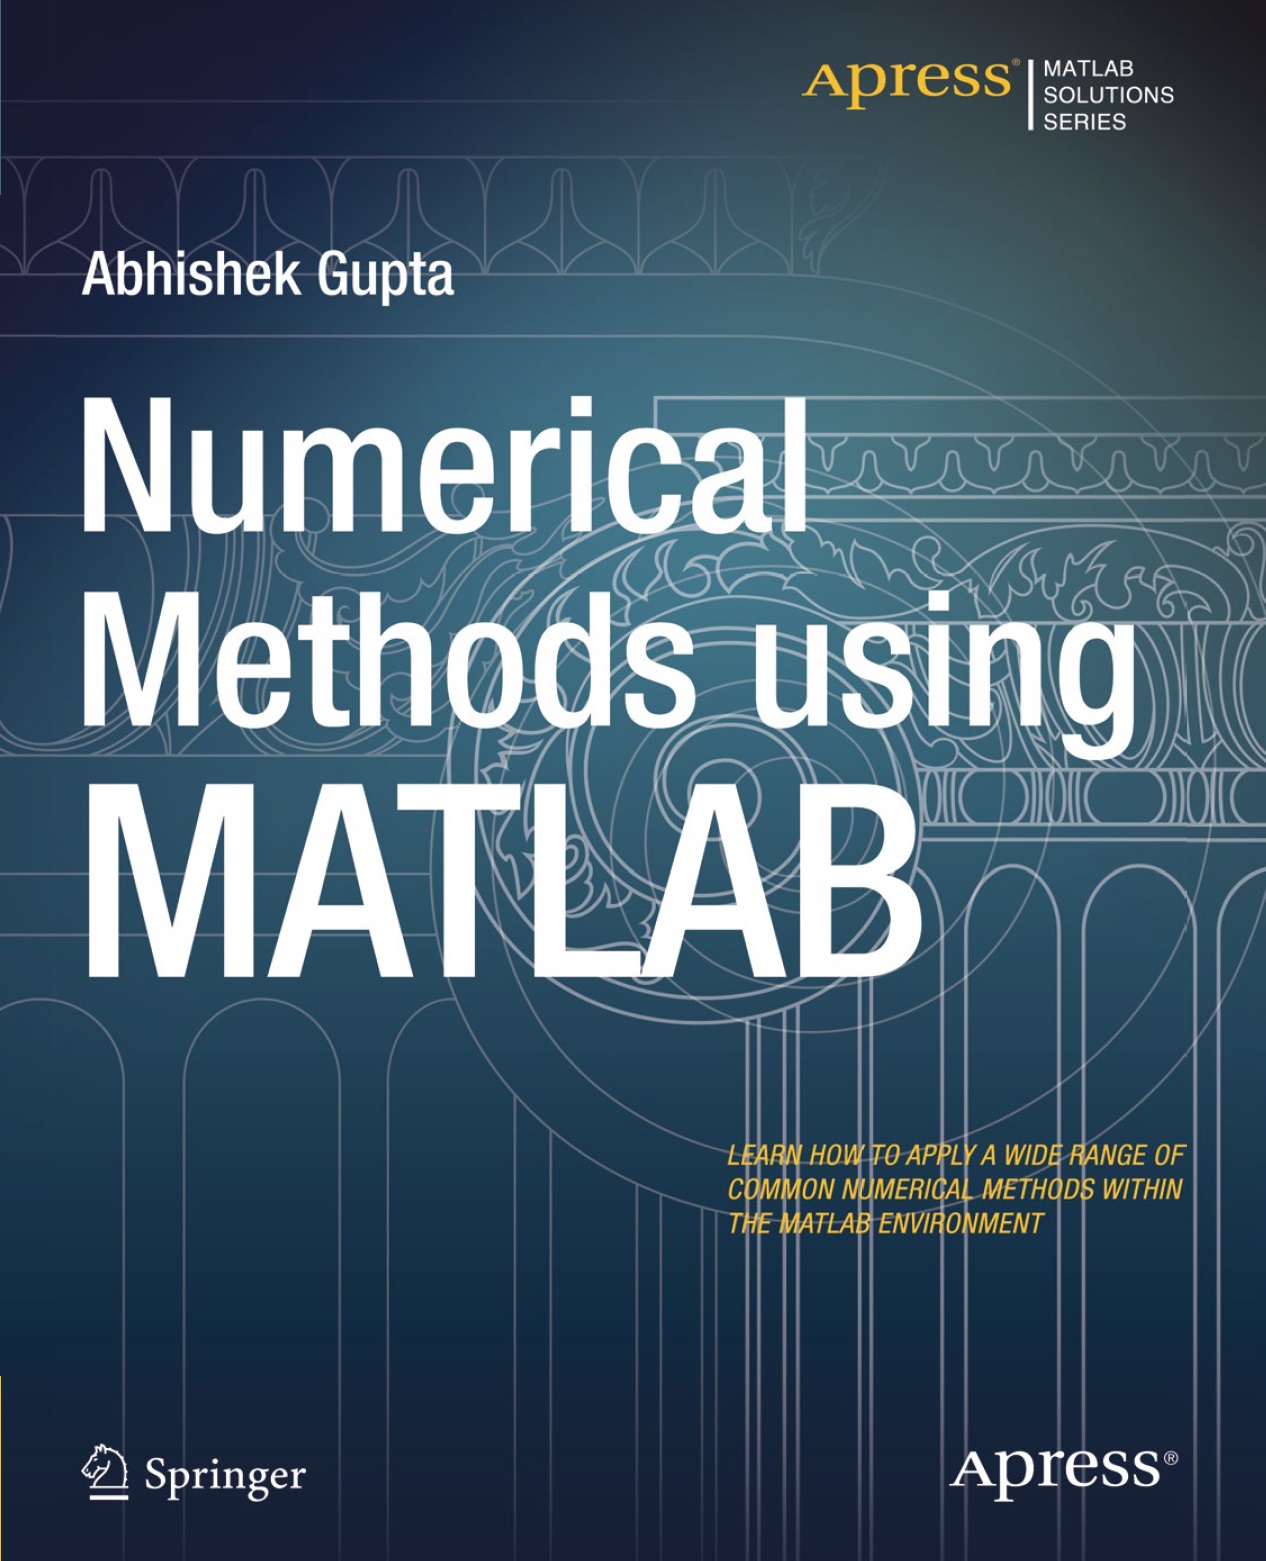 Numerical methods reihstmayer. Numerical methods